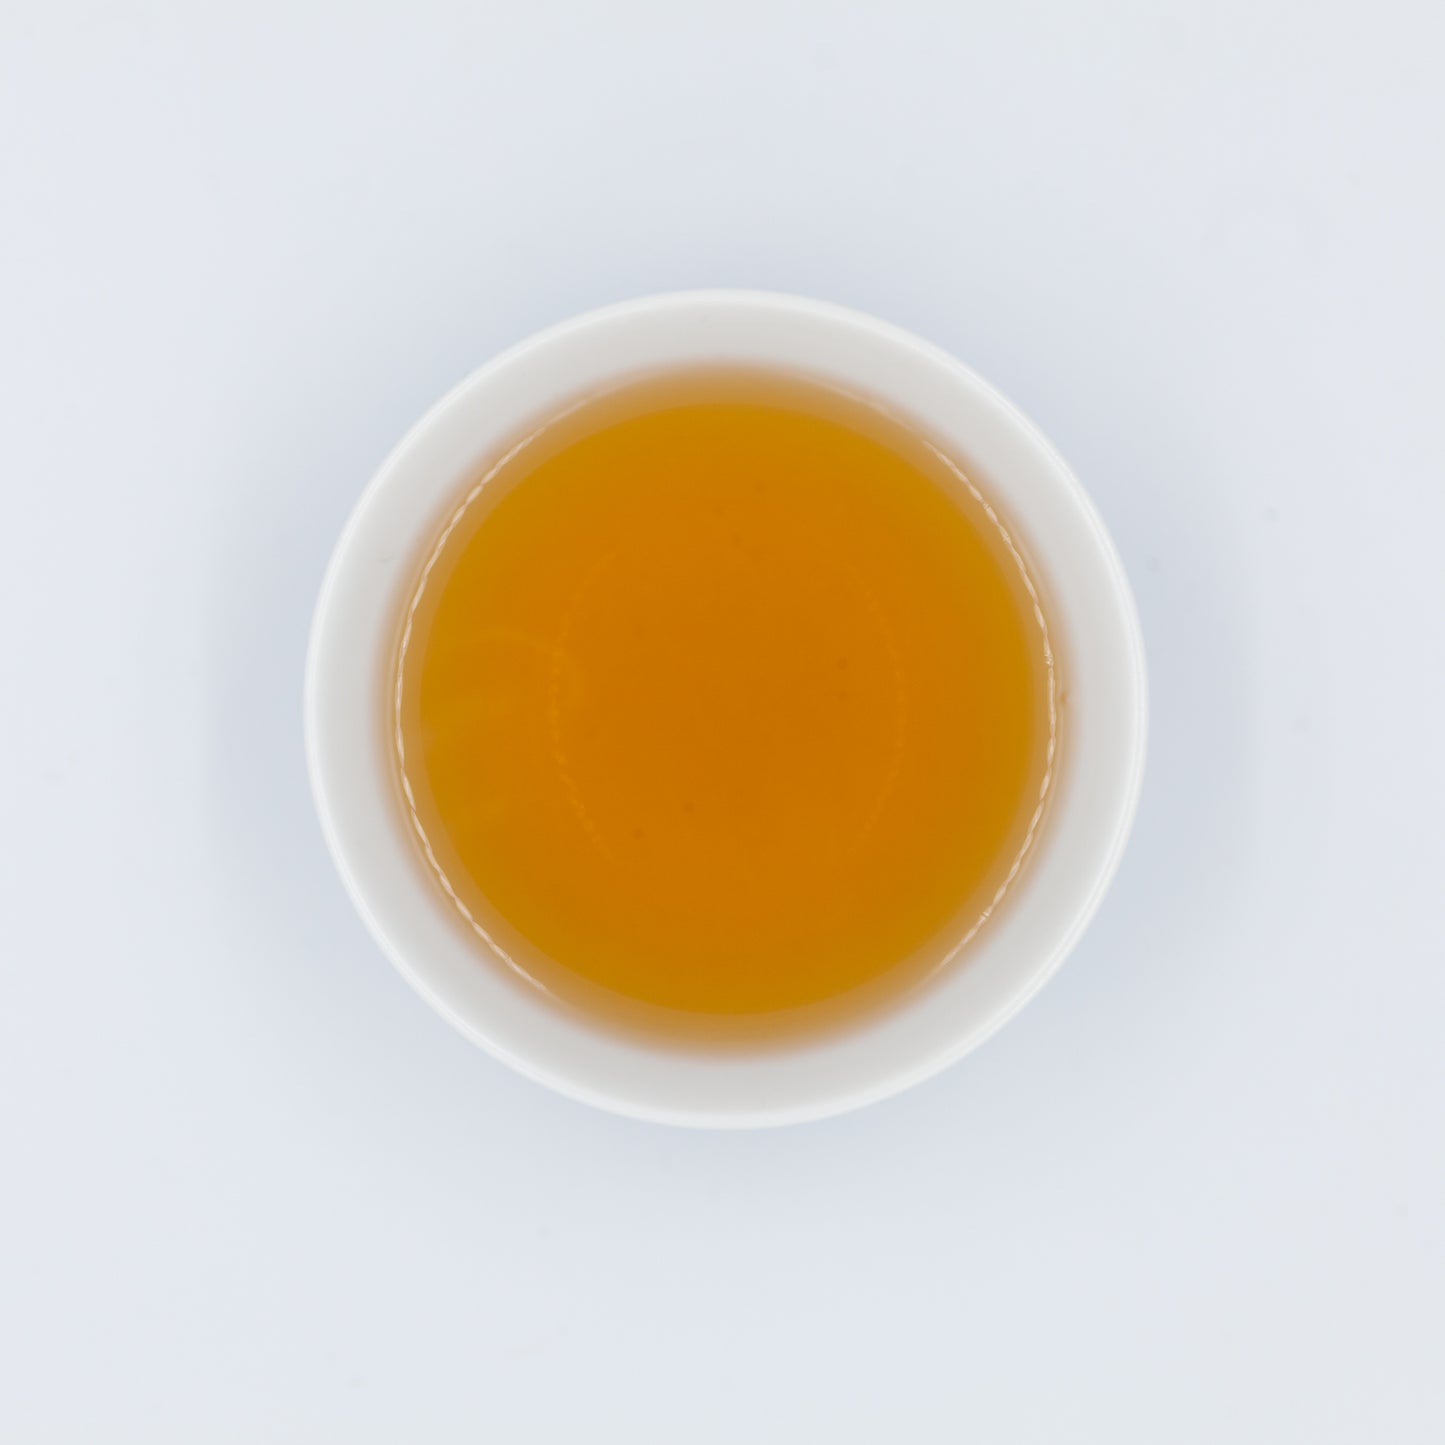 Benifuki Black  from BROO - Craft Tea from Japan. Single-origin, small-batch, pesticide-free tea grown in Yame, Fukuoka. べにふうき紅茶